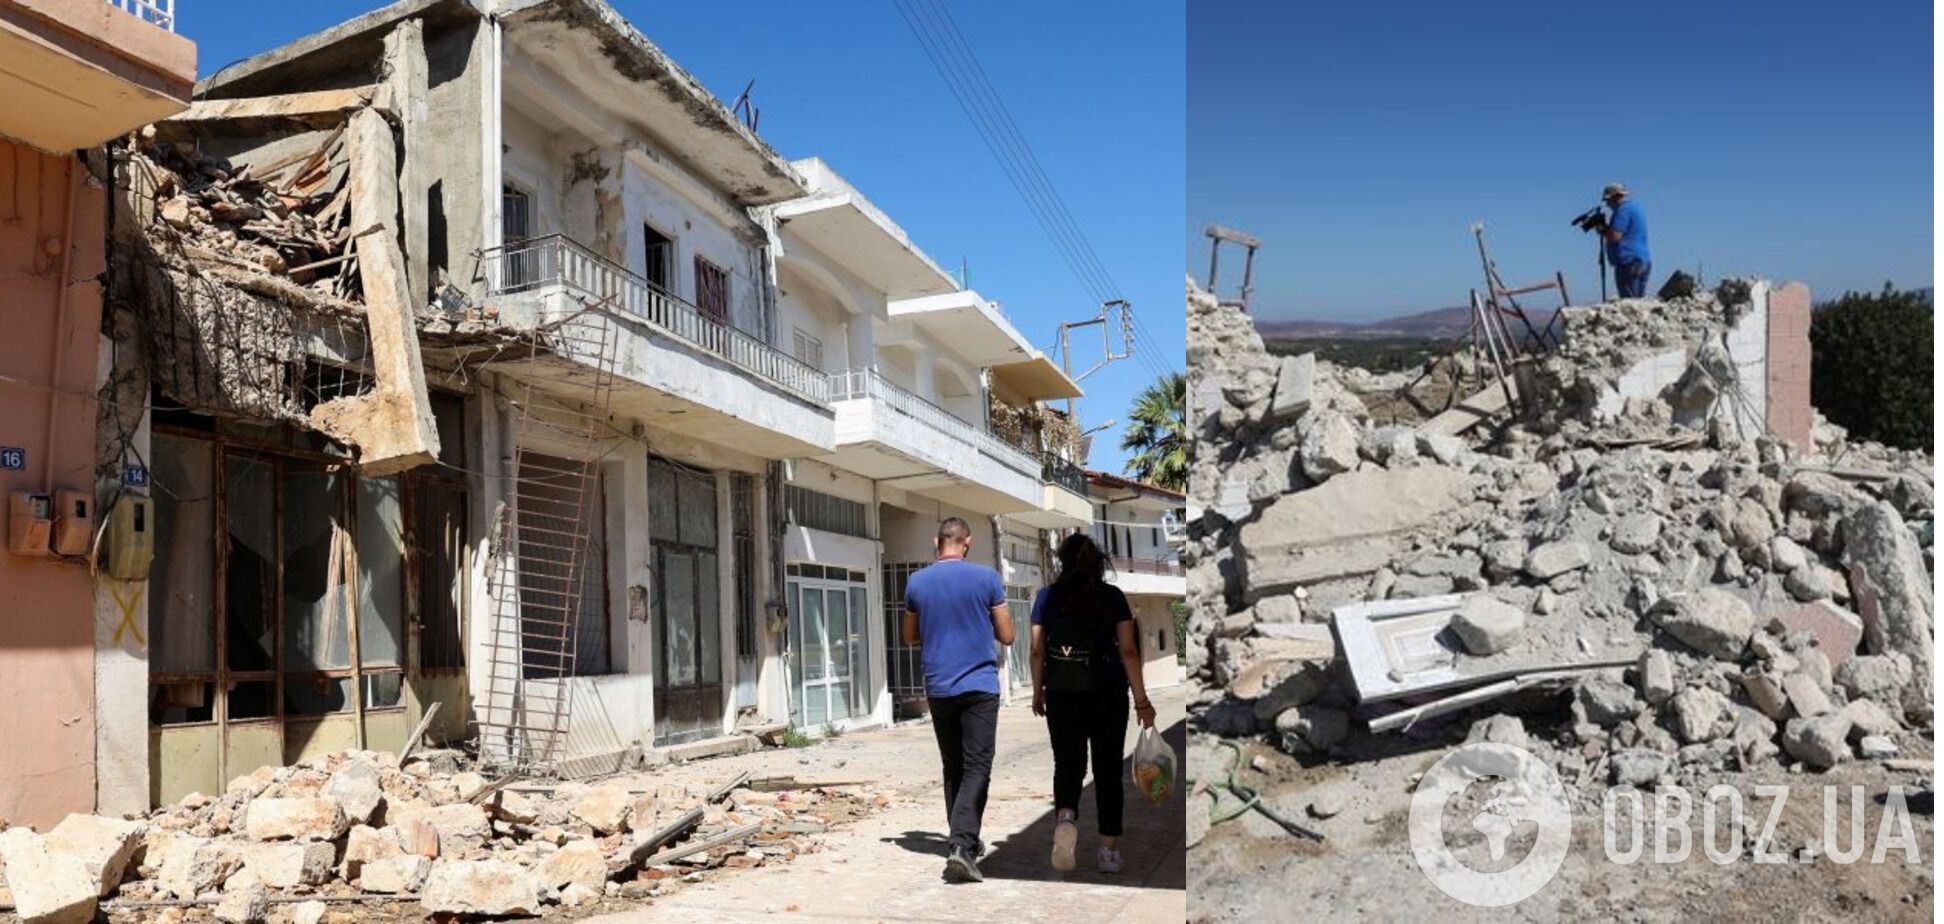 Последствия землетрясения возле города Аркалохорион